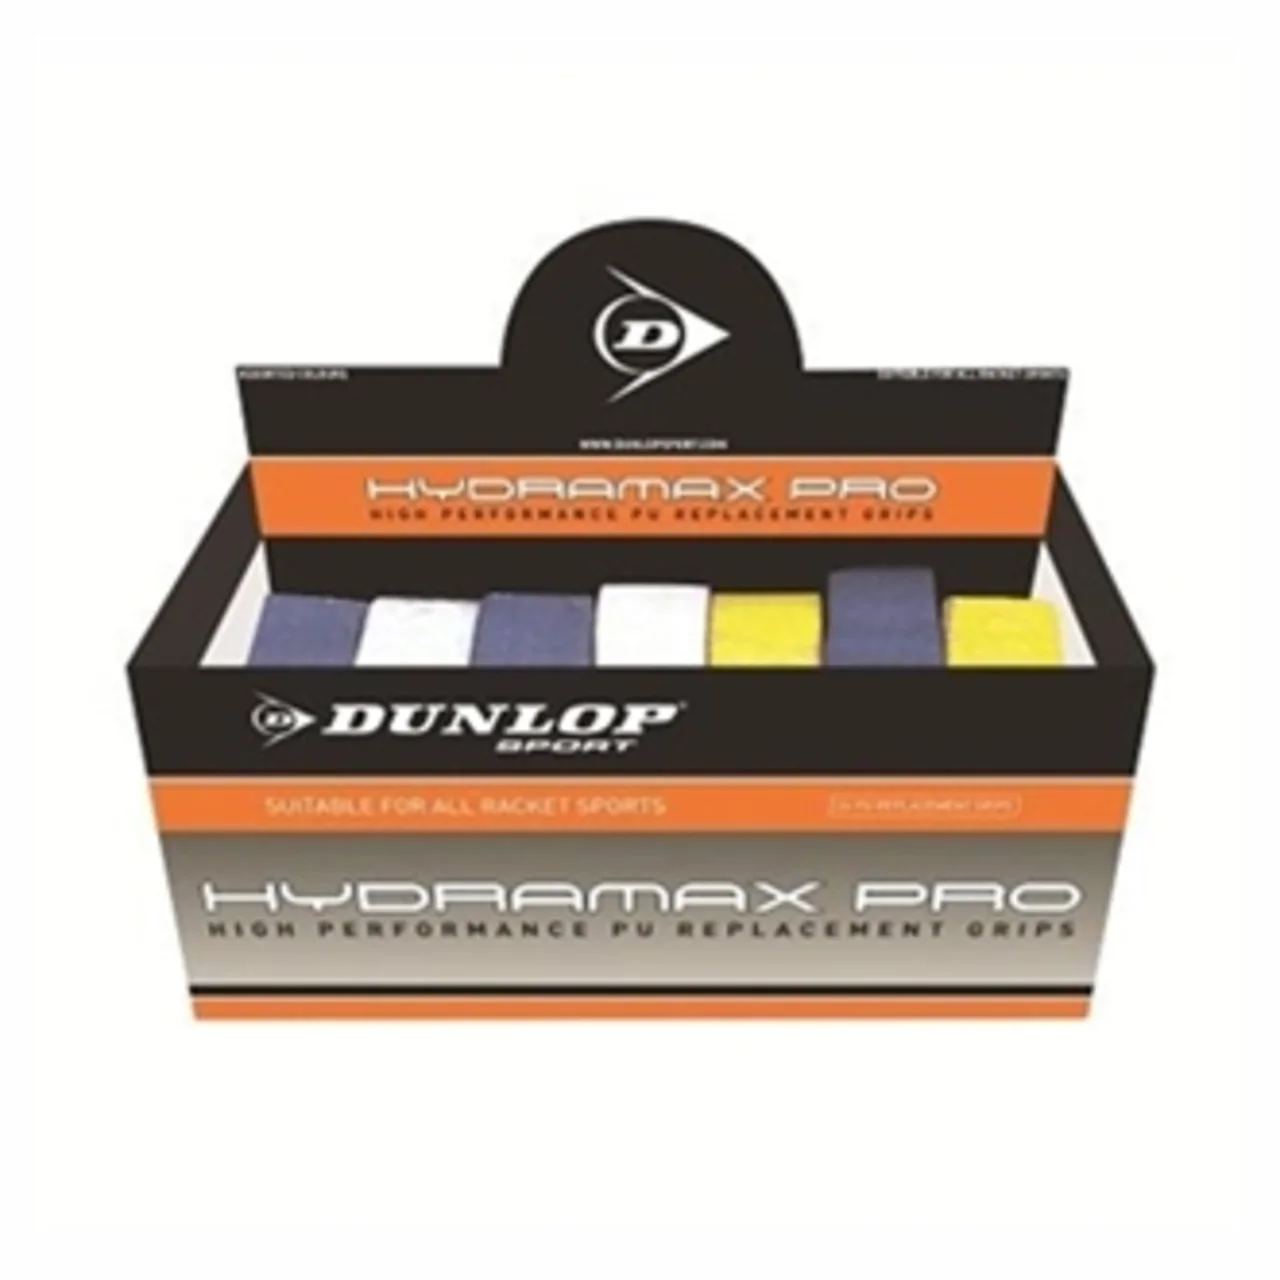 Dunlop Hydramax Pro